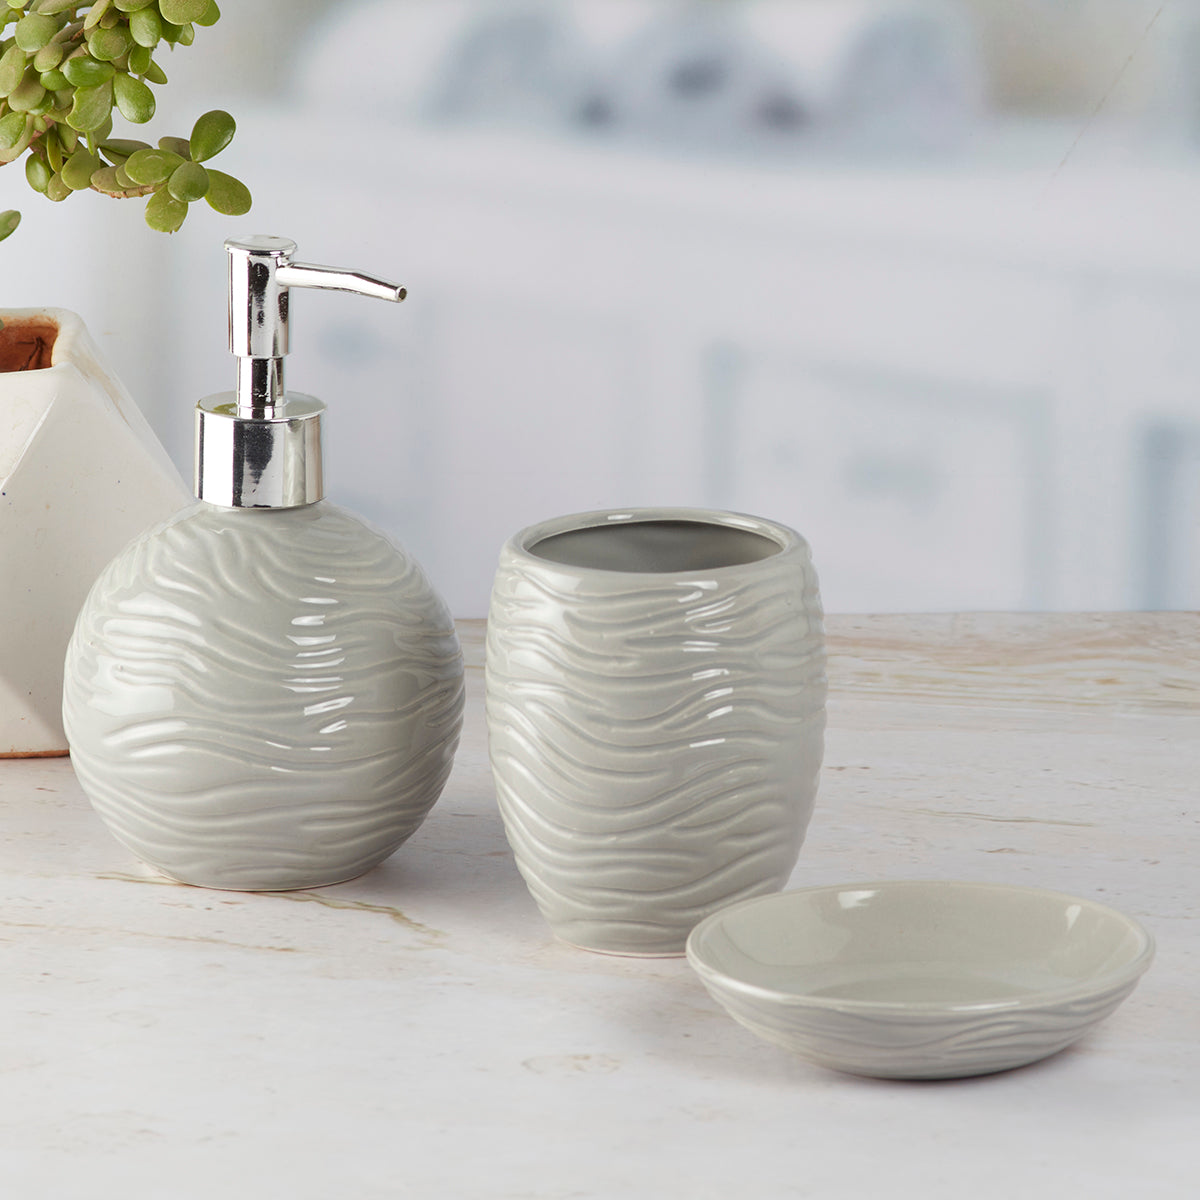 Ceramic Bathroom Accessories Set of 3 Bath Set with Soap Dispenser (9616)